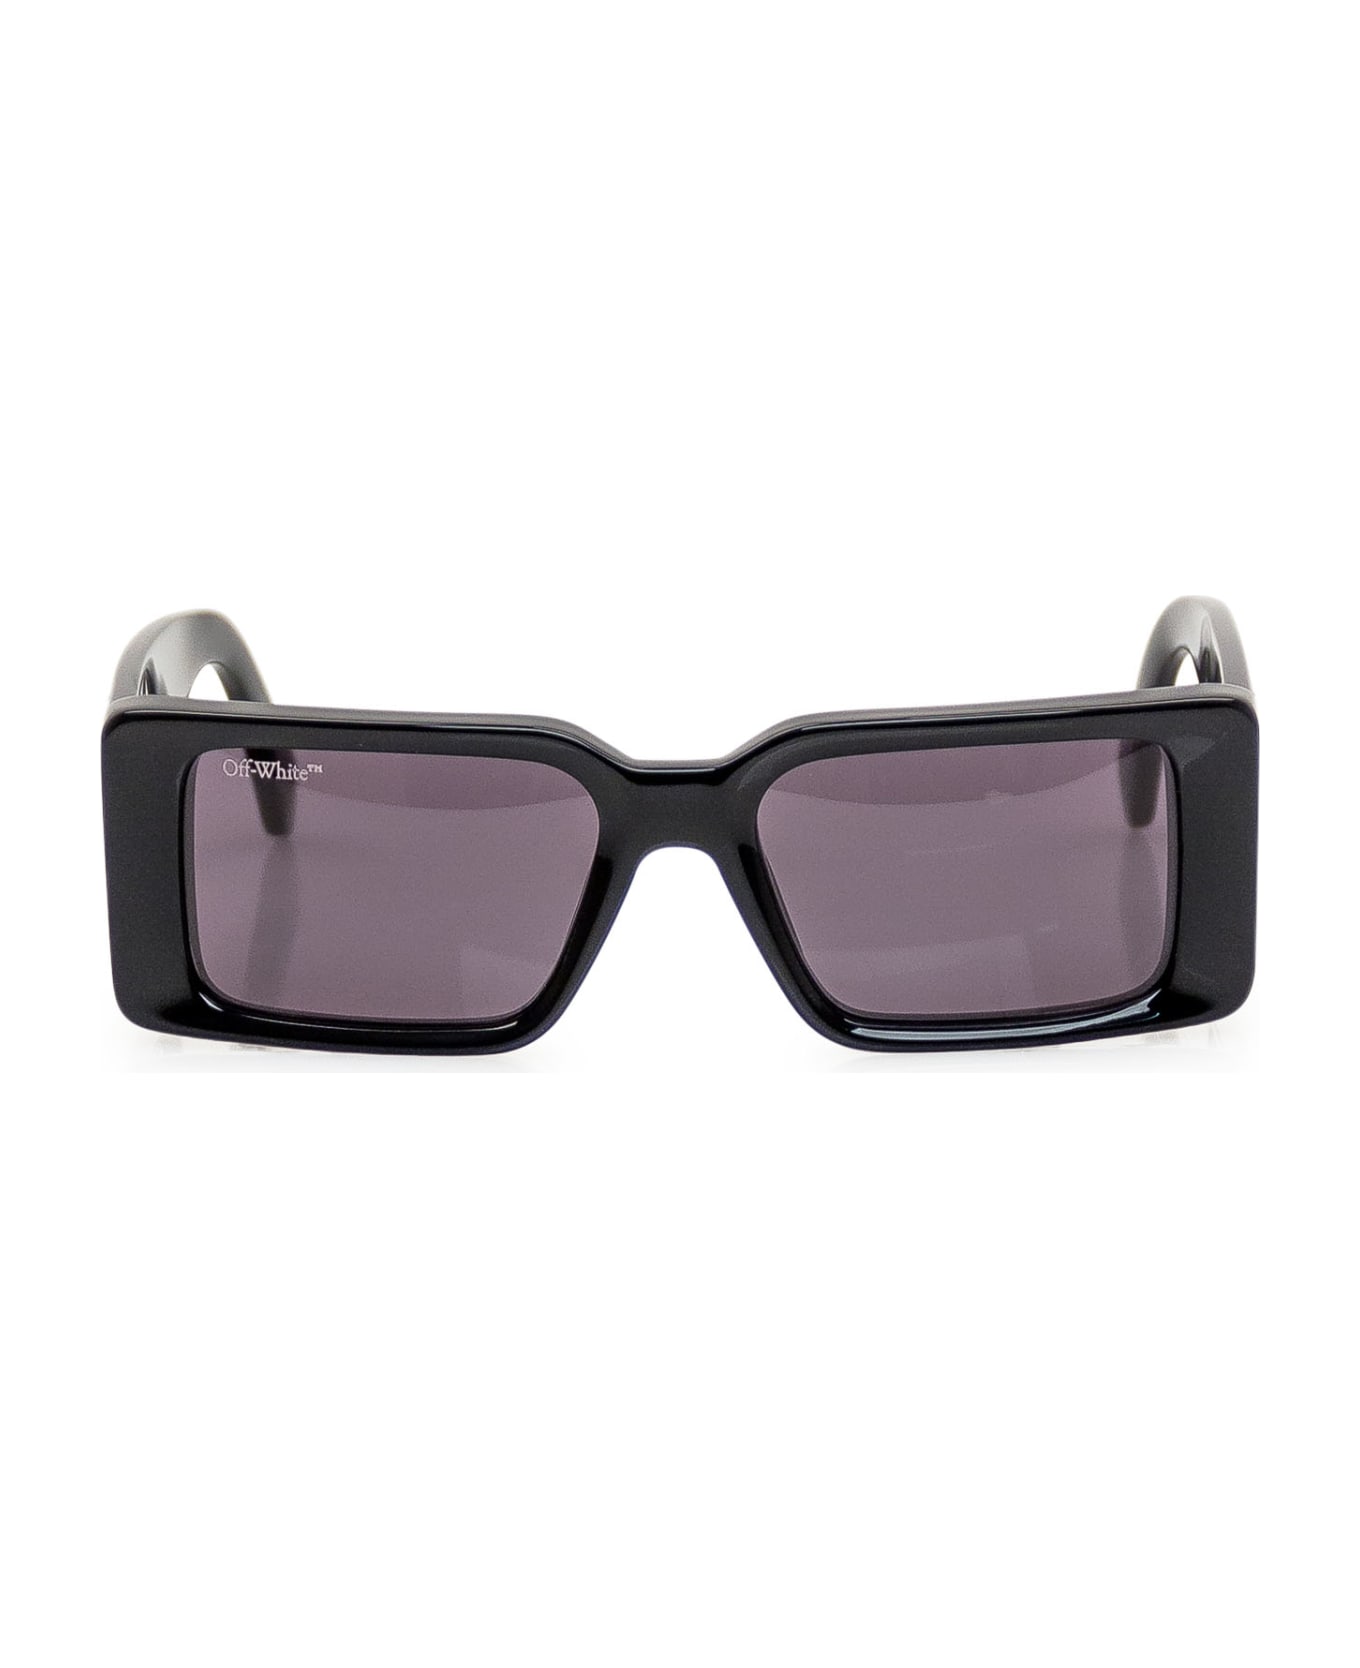 Off-White Milano Sunglasses - BLACK DARK